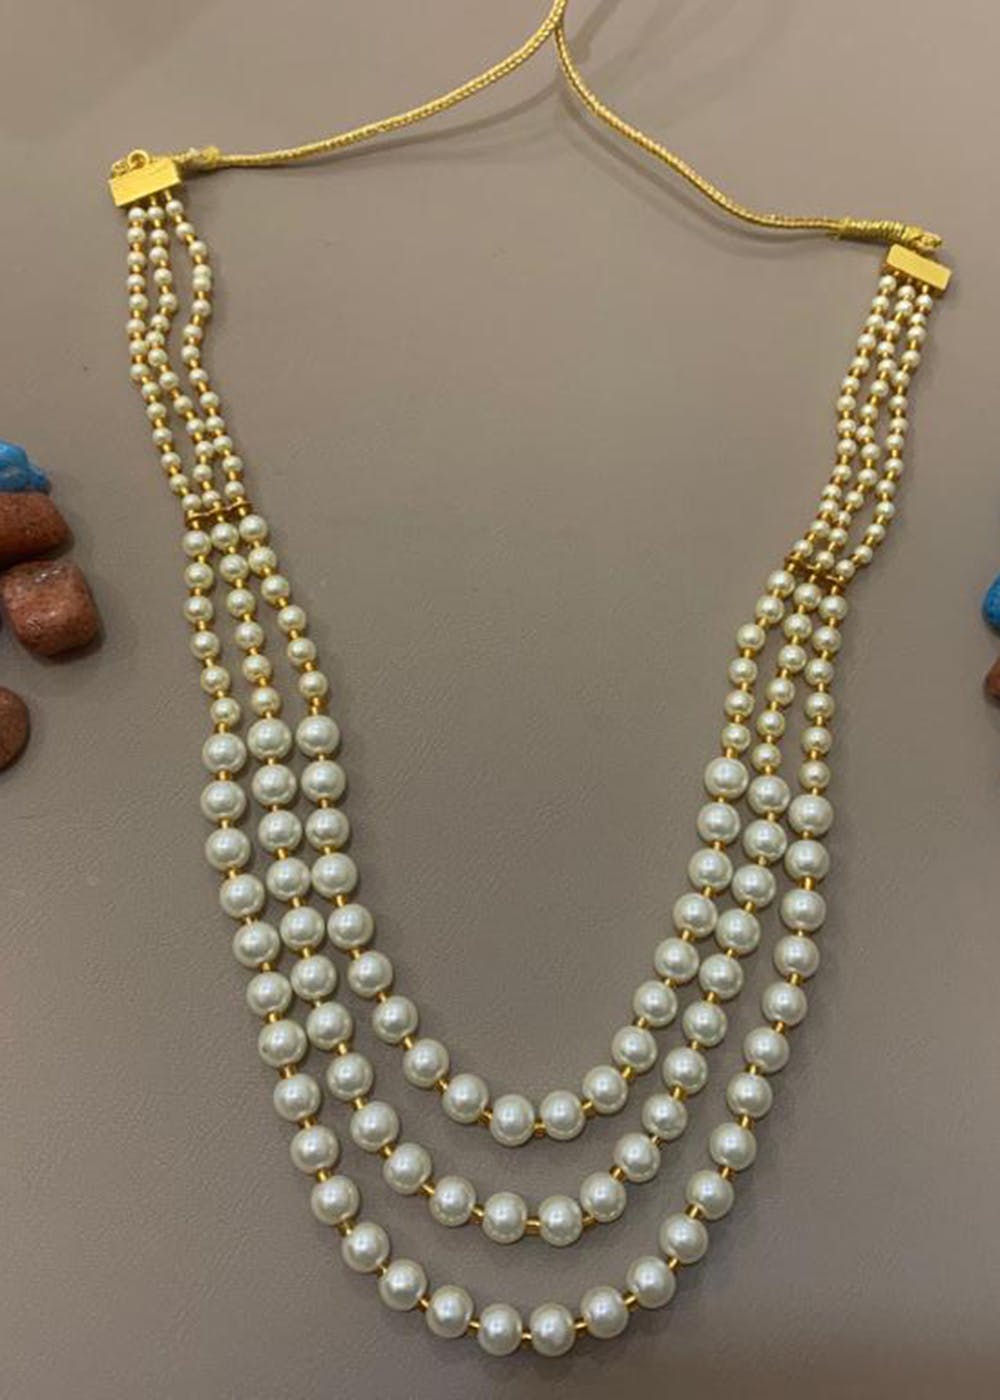 Get White Pearl Mala at ₹ 550 | LBB Shop